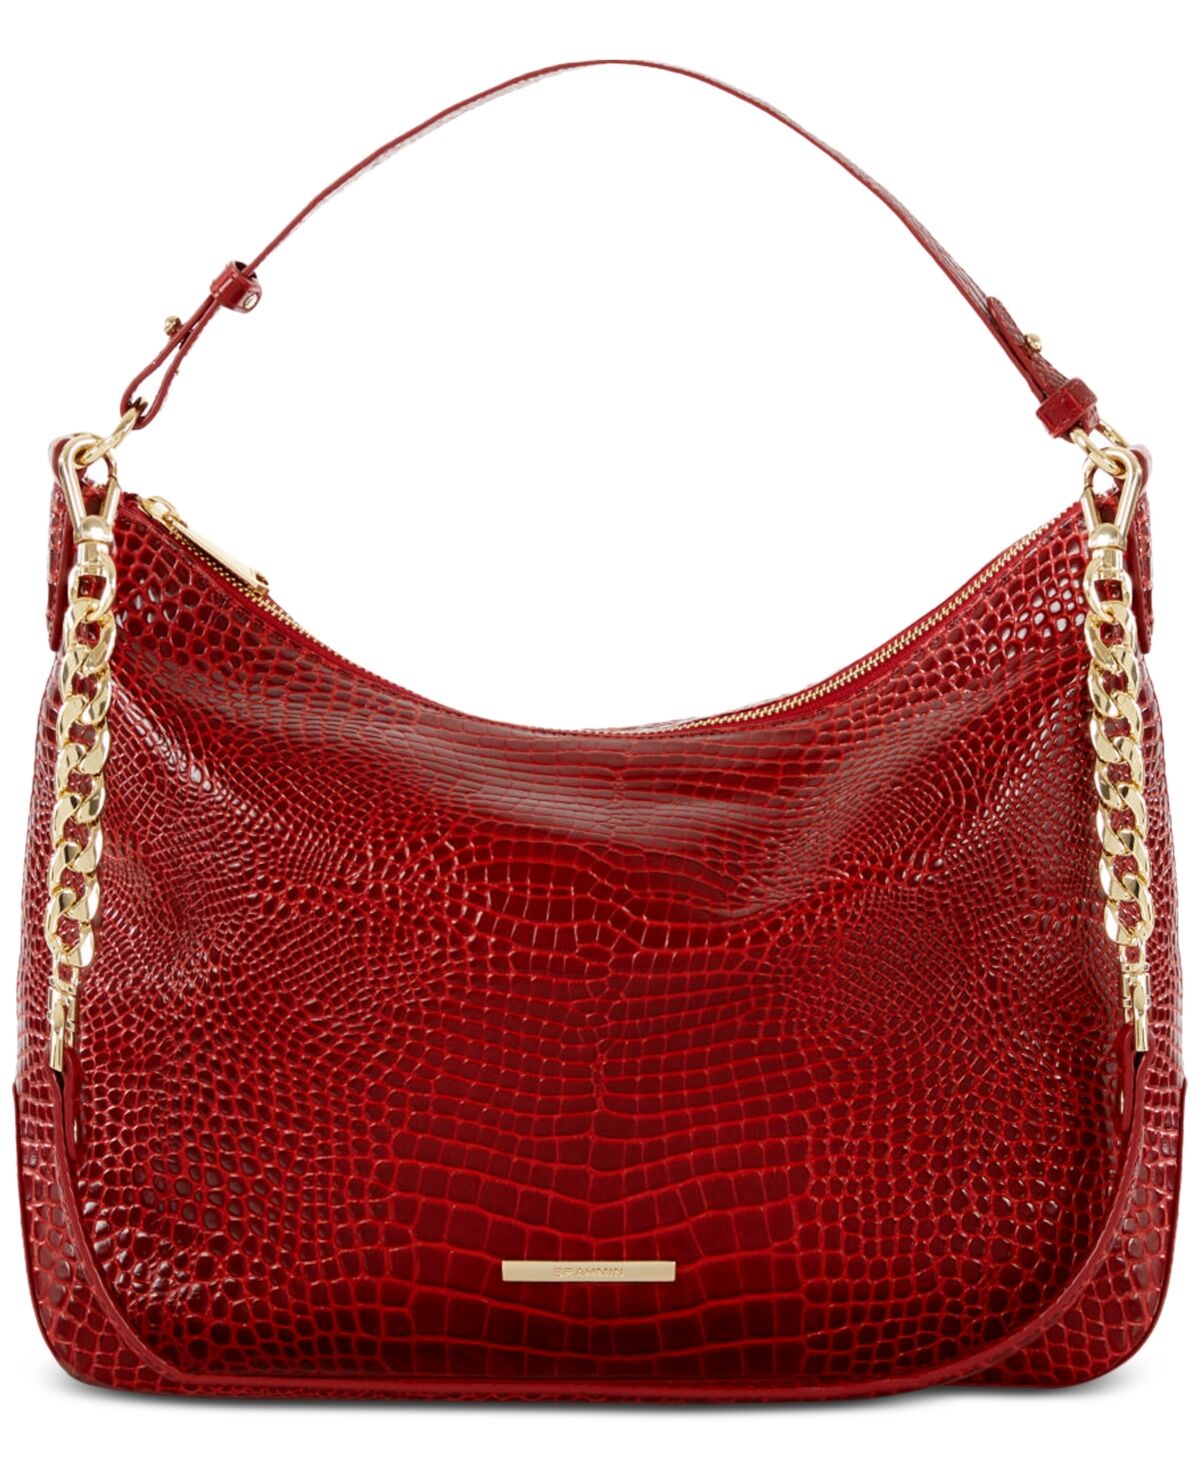 Brahmin Heather Glissandro Embossed Leather Shoulder Bag - Red